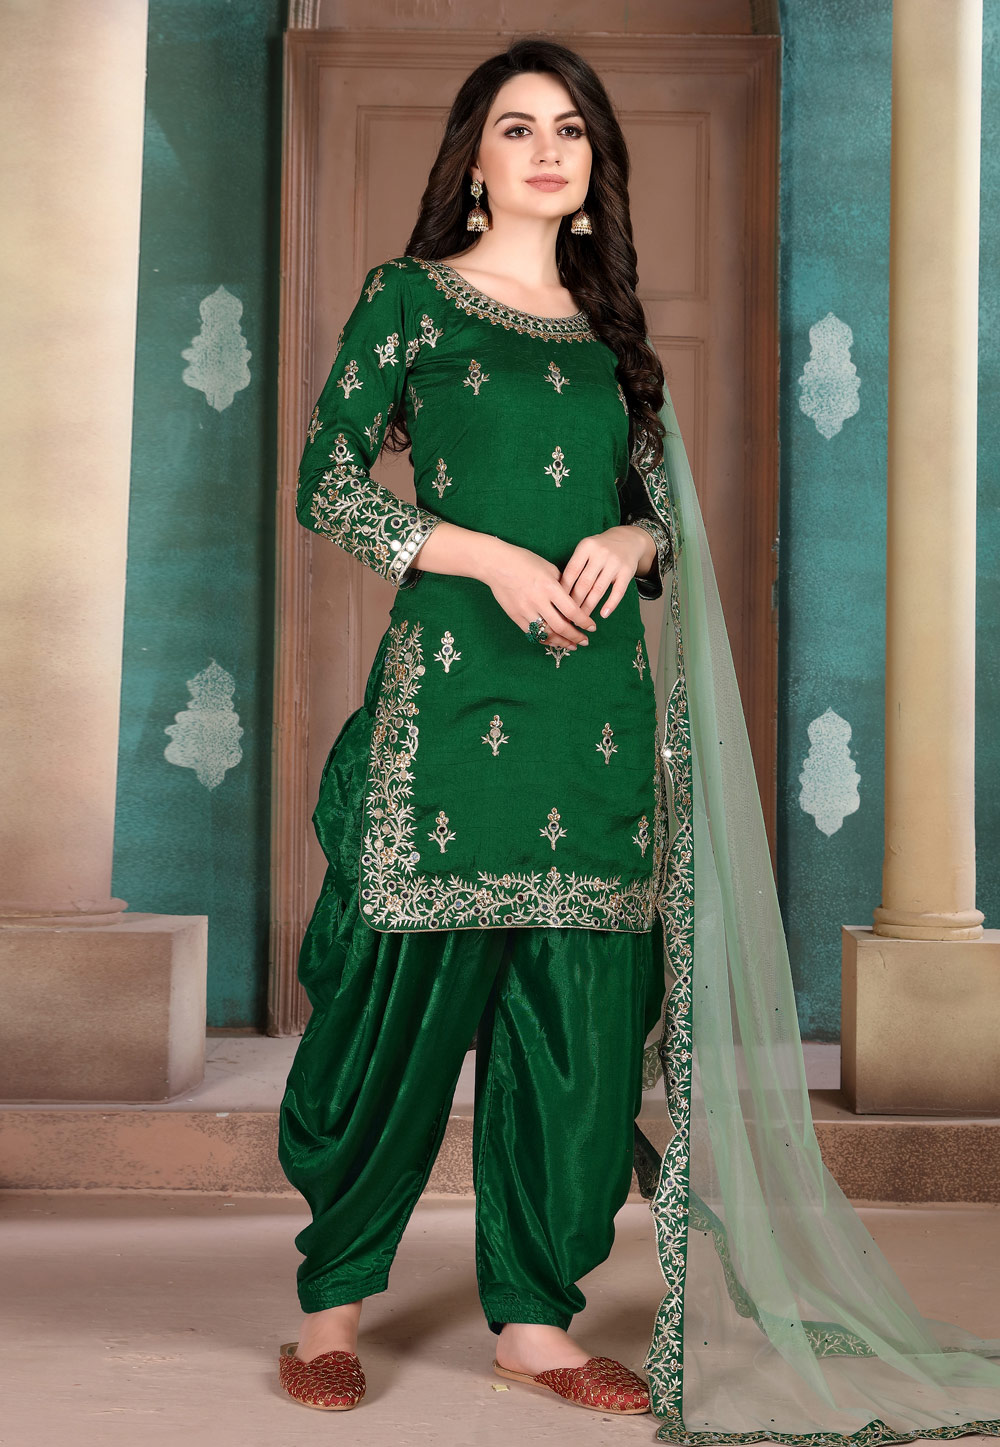 Green Punjabi Suit | Designer punjabi suits, Salwar designs, Stylish suit